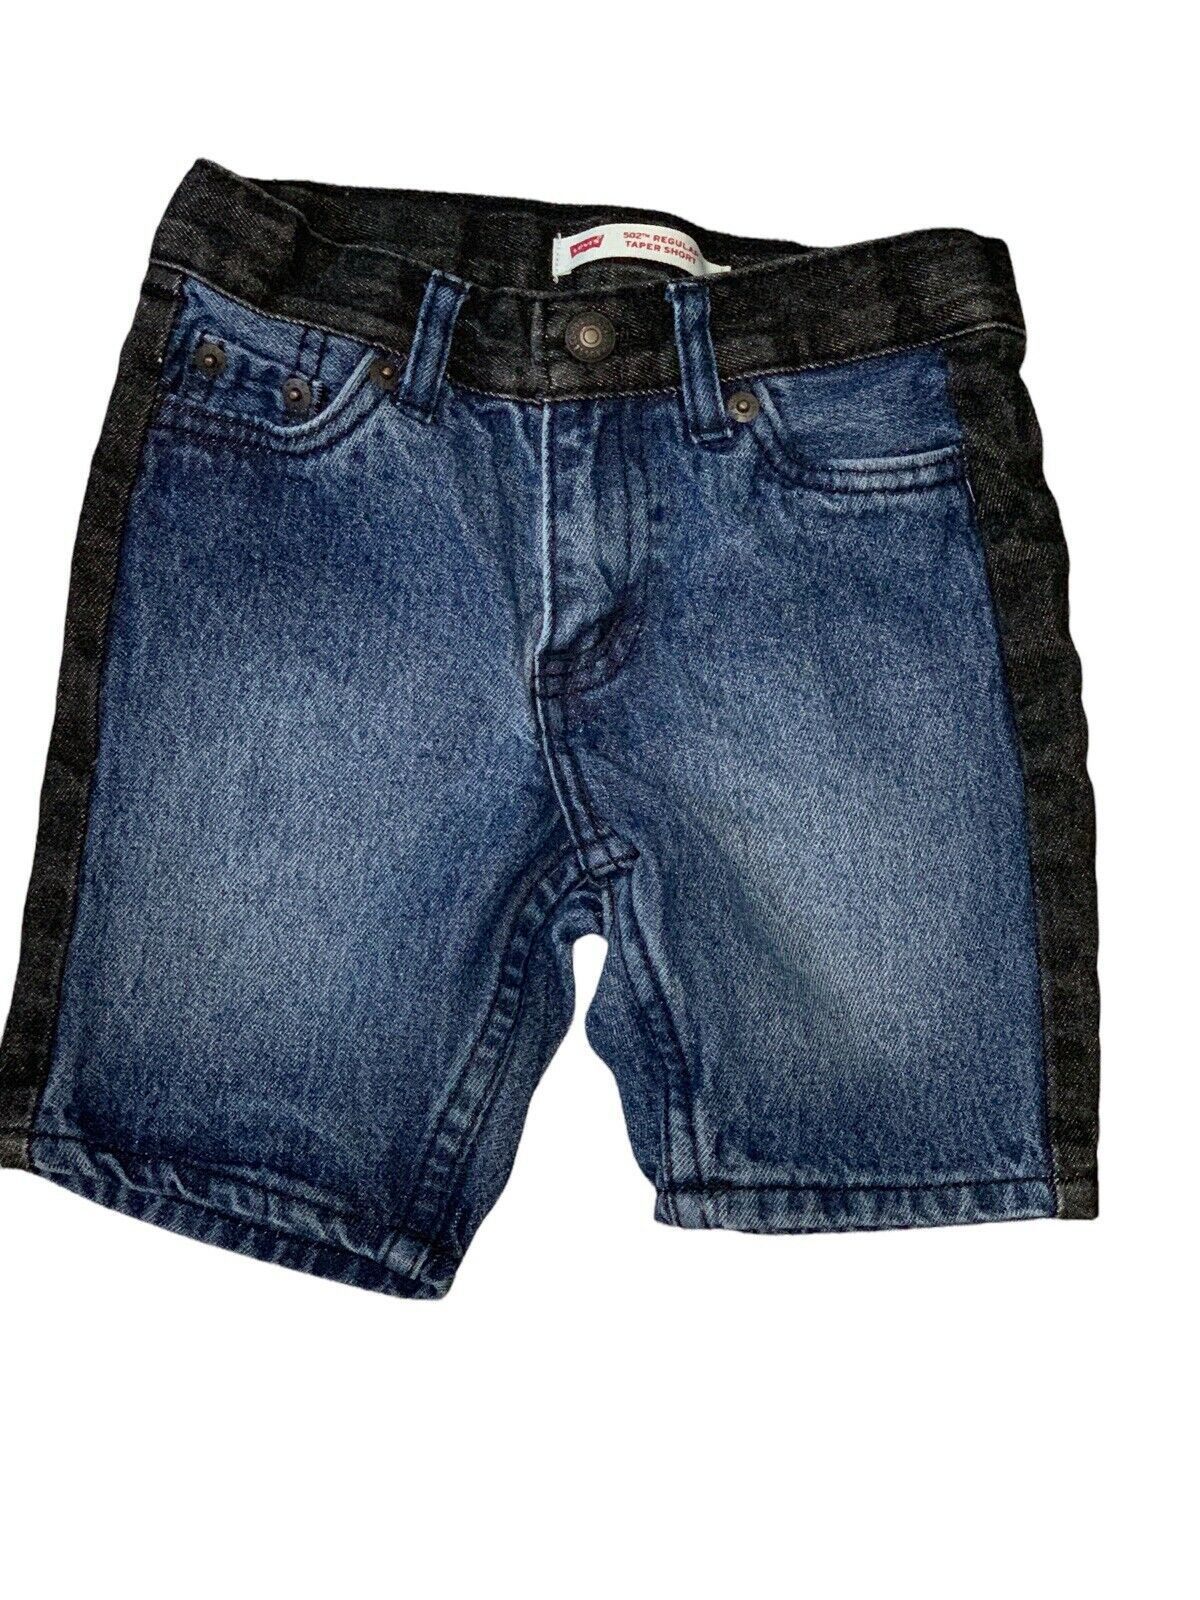 Levi's Block Party 502 Regular Taper-Fit Denim Shorts Boys 4 Toddler Blue Black - $9.98